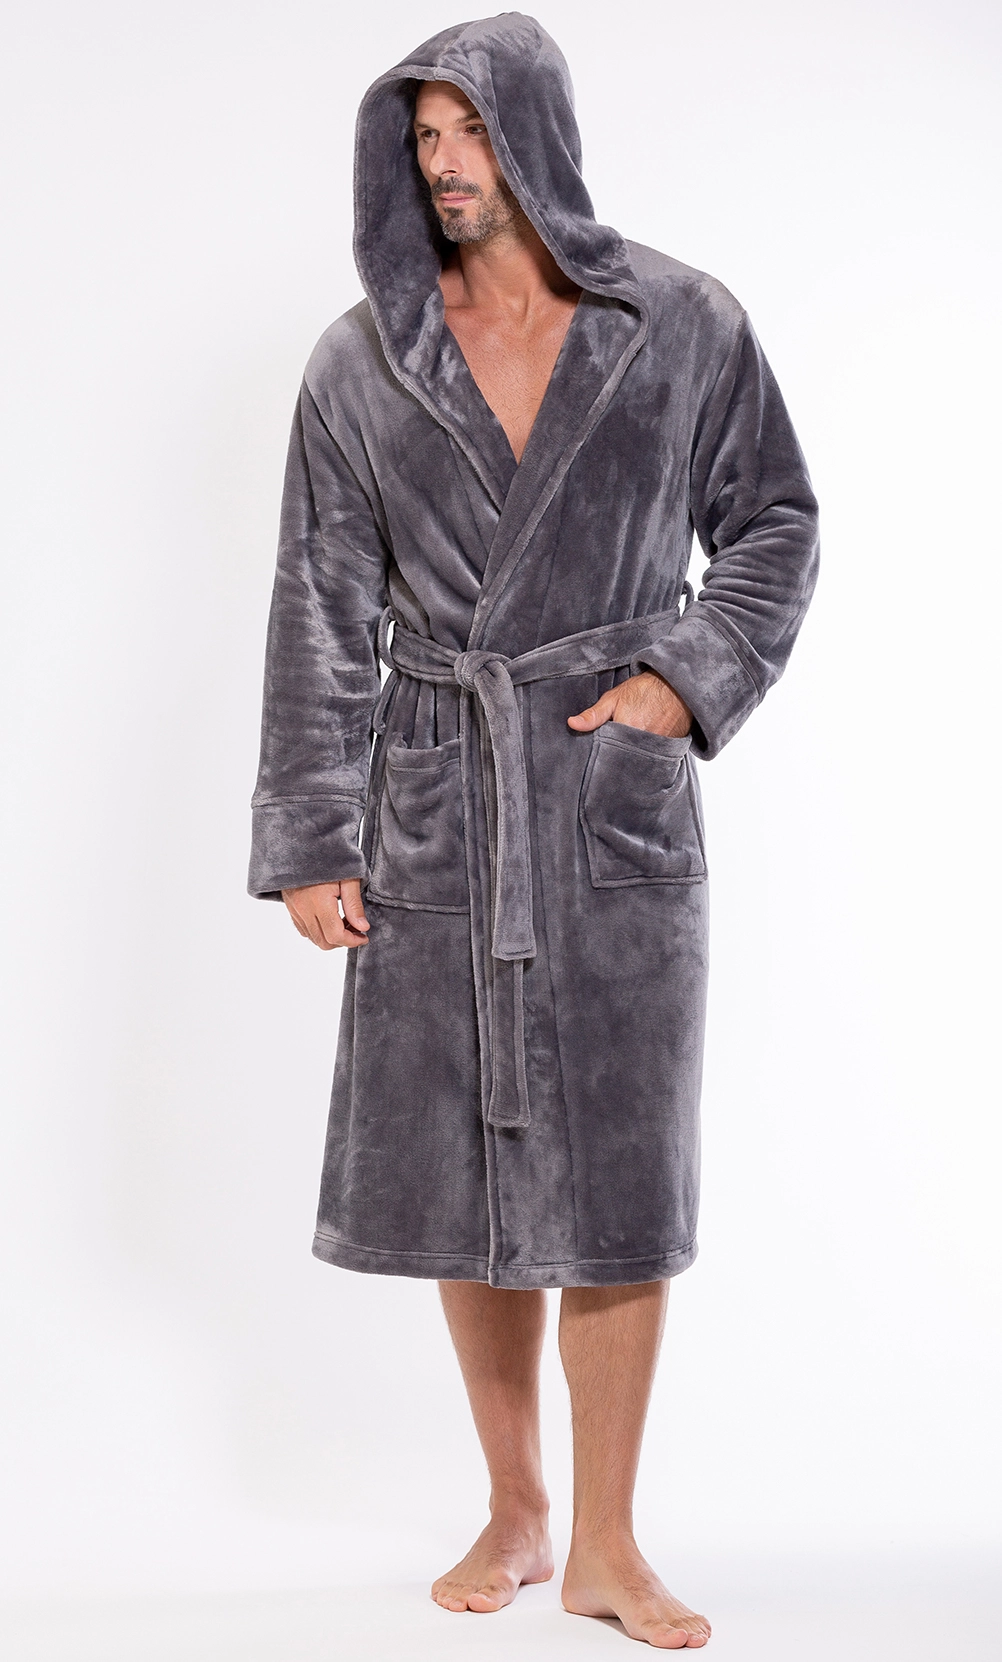 Luxury Bathrobes :: Plush Robes :: Men's Gray Plush Soft Warm Fleece  Bathrobe with Hood, Comfy Men's Robe - Wholesale bathrobes, Spa robes, Kids  robes, Cotton robes, Spa Slippers, Wholesale Towels